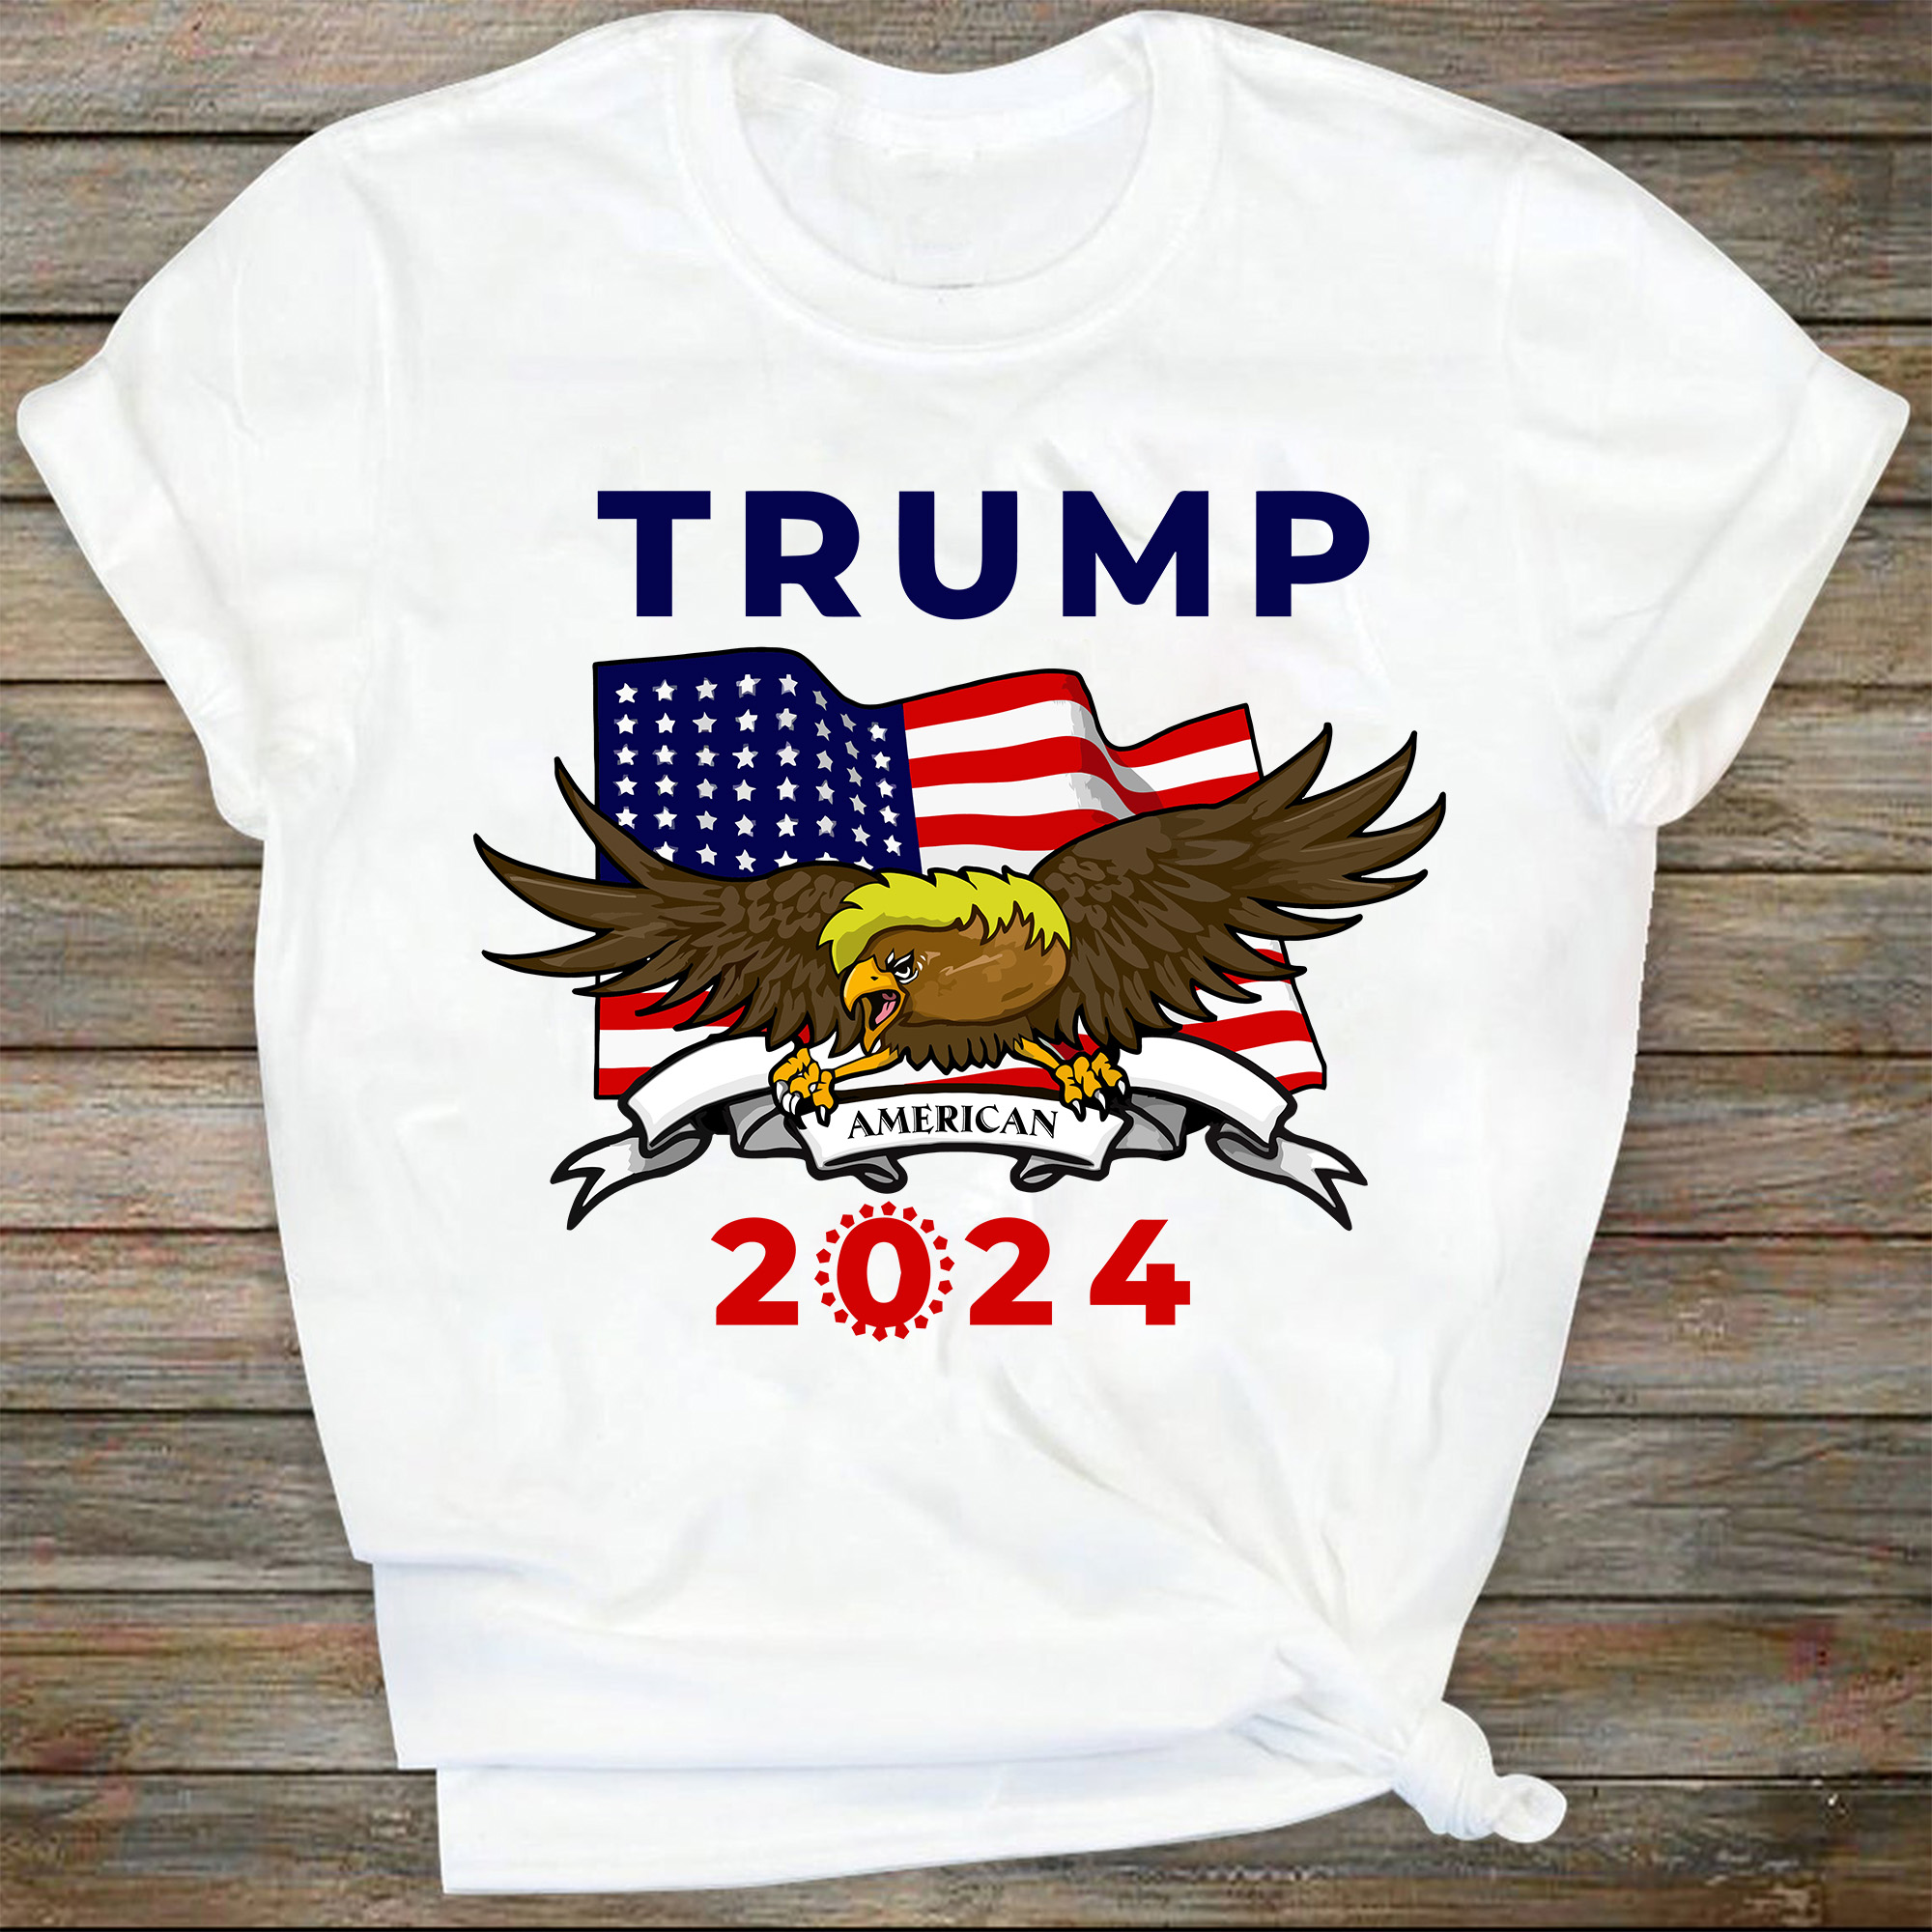 Trump 2024 SVG file, Sublimation Designs Download, Digital, Pro Trump, Anti  Biden, FJB, Let's Go Brandon - Buy t-shirt designs